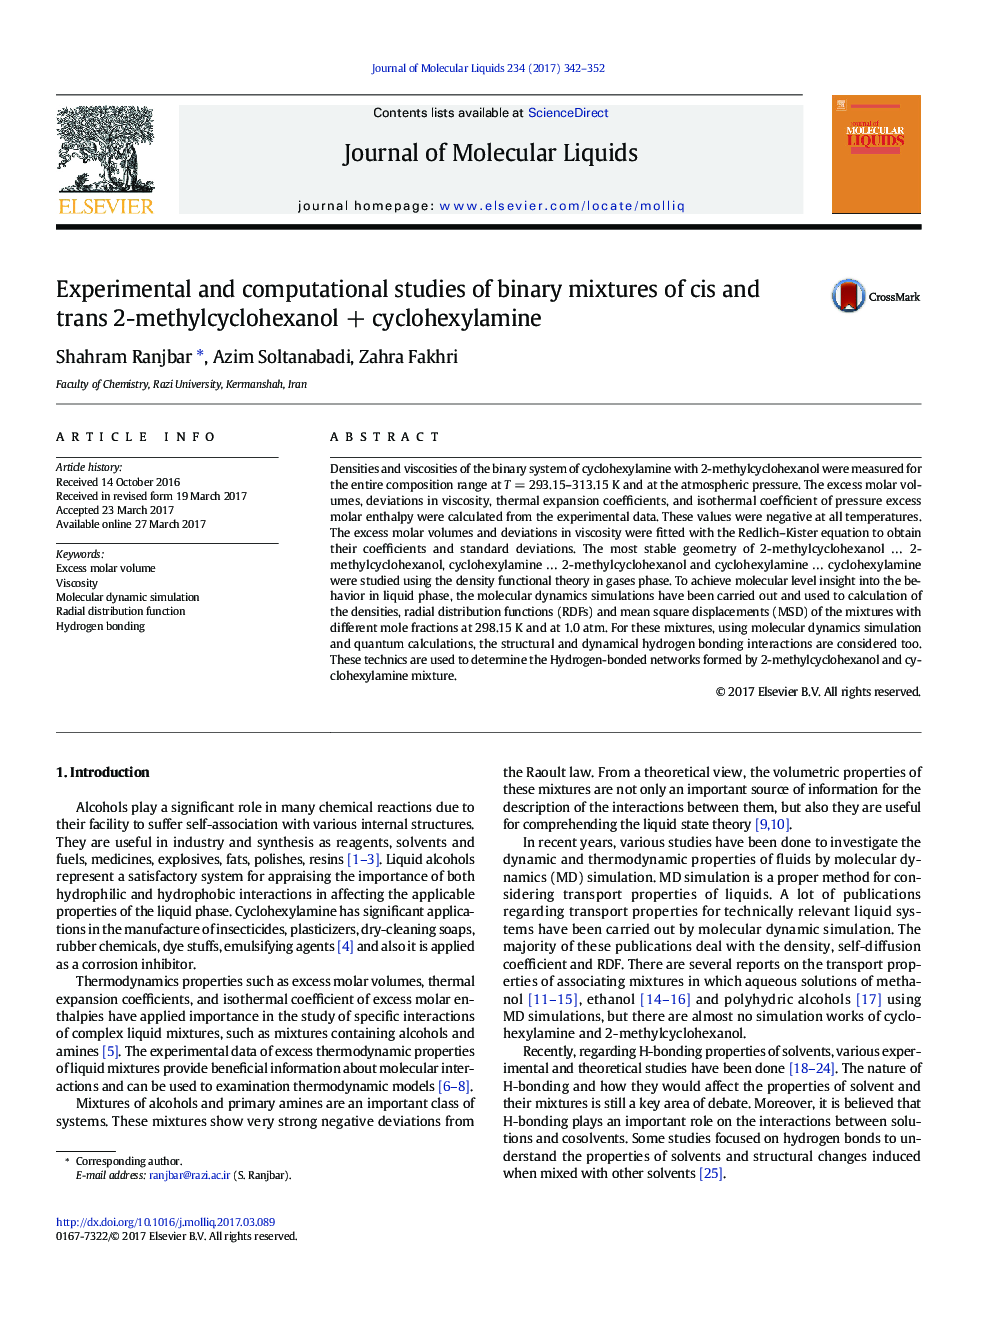 Experimental and computational studies of binary mixtures of cis and trans 2-methylcyclohexanolÂ +Â cyclohexylamine